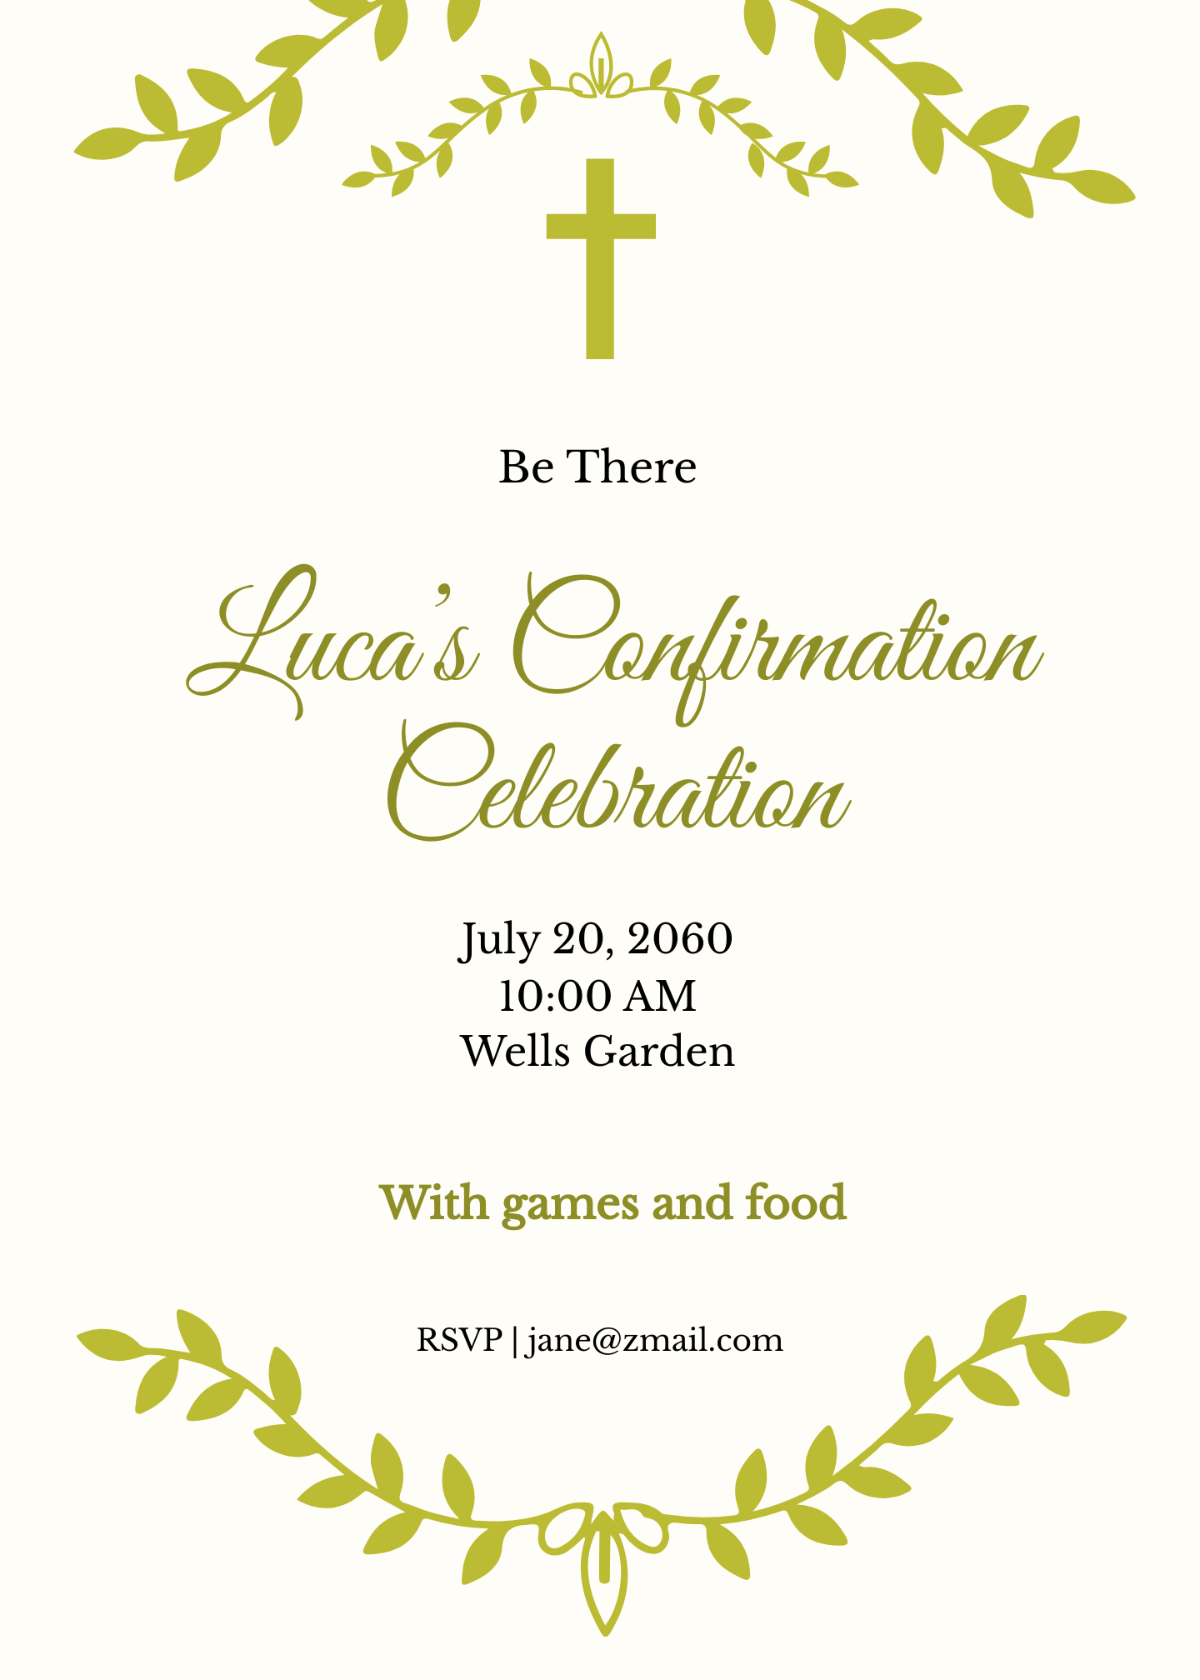 Free Confirmation Celebration Invitation Template